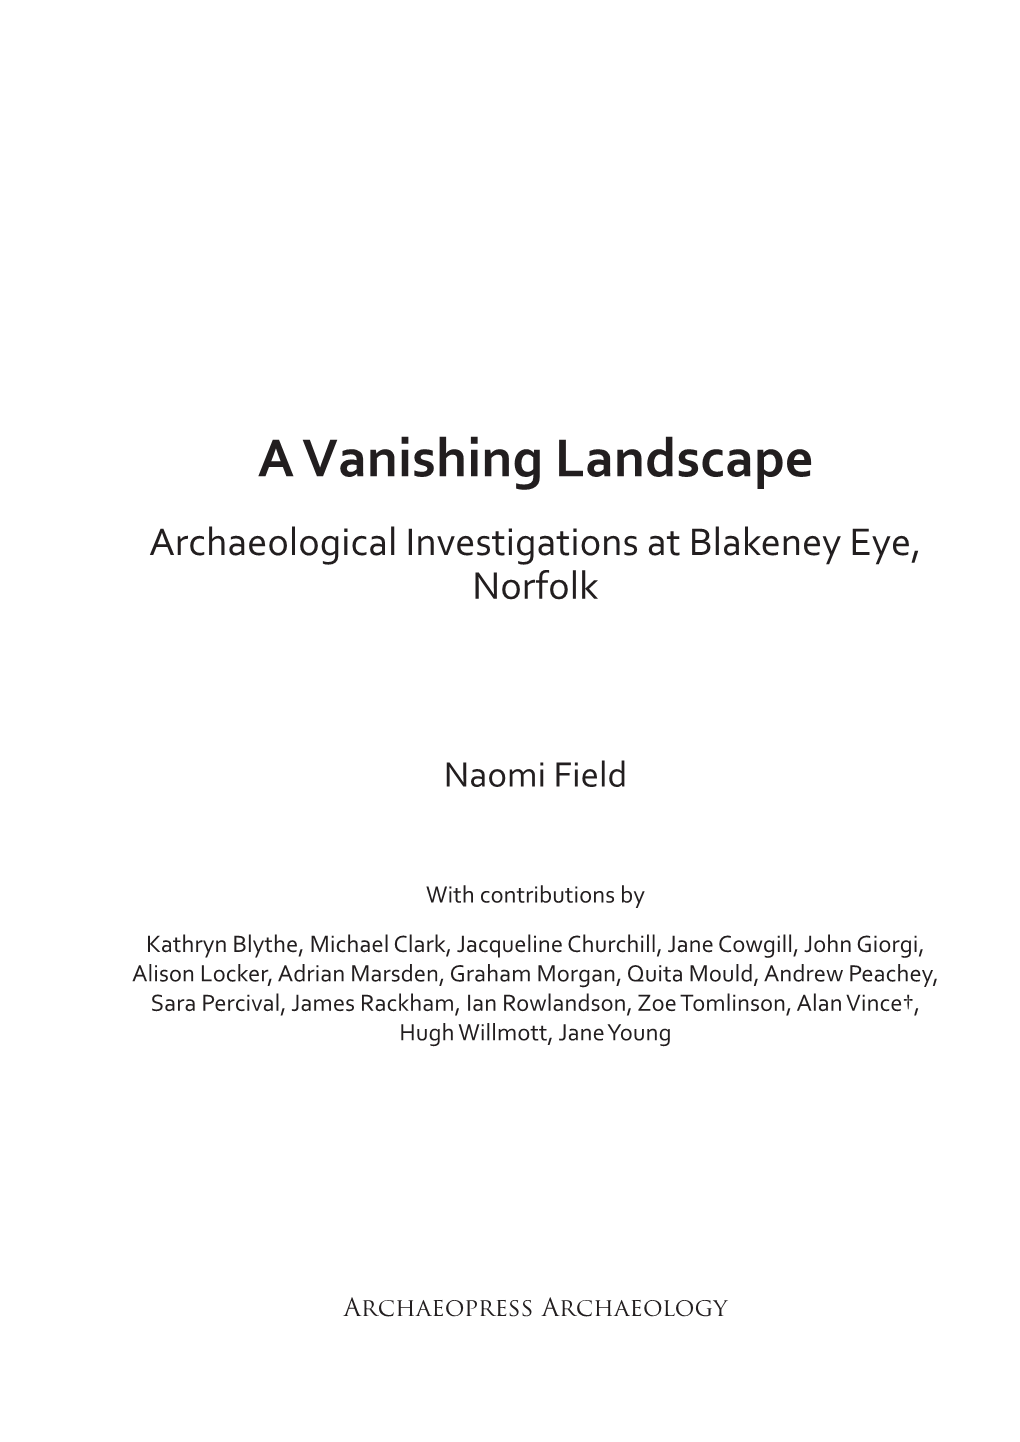 Archaeological Investigations at Blakeney Eye, Norfolk